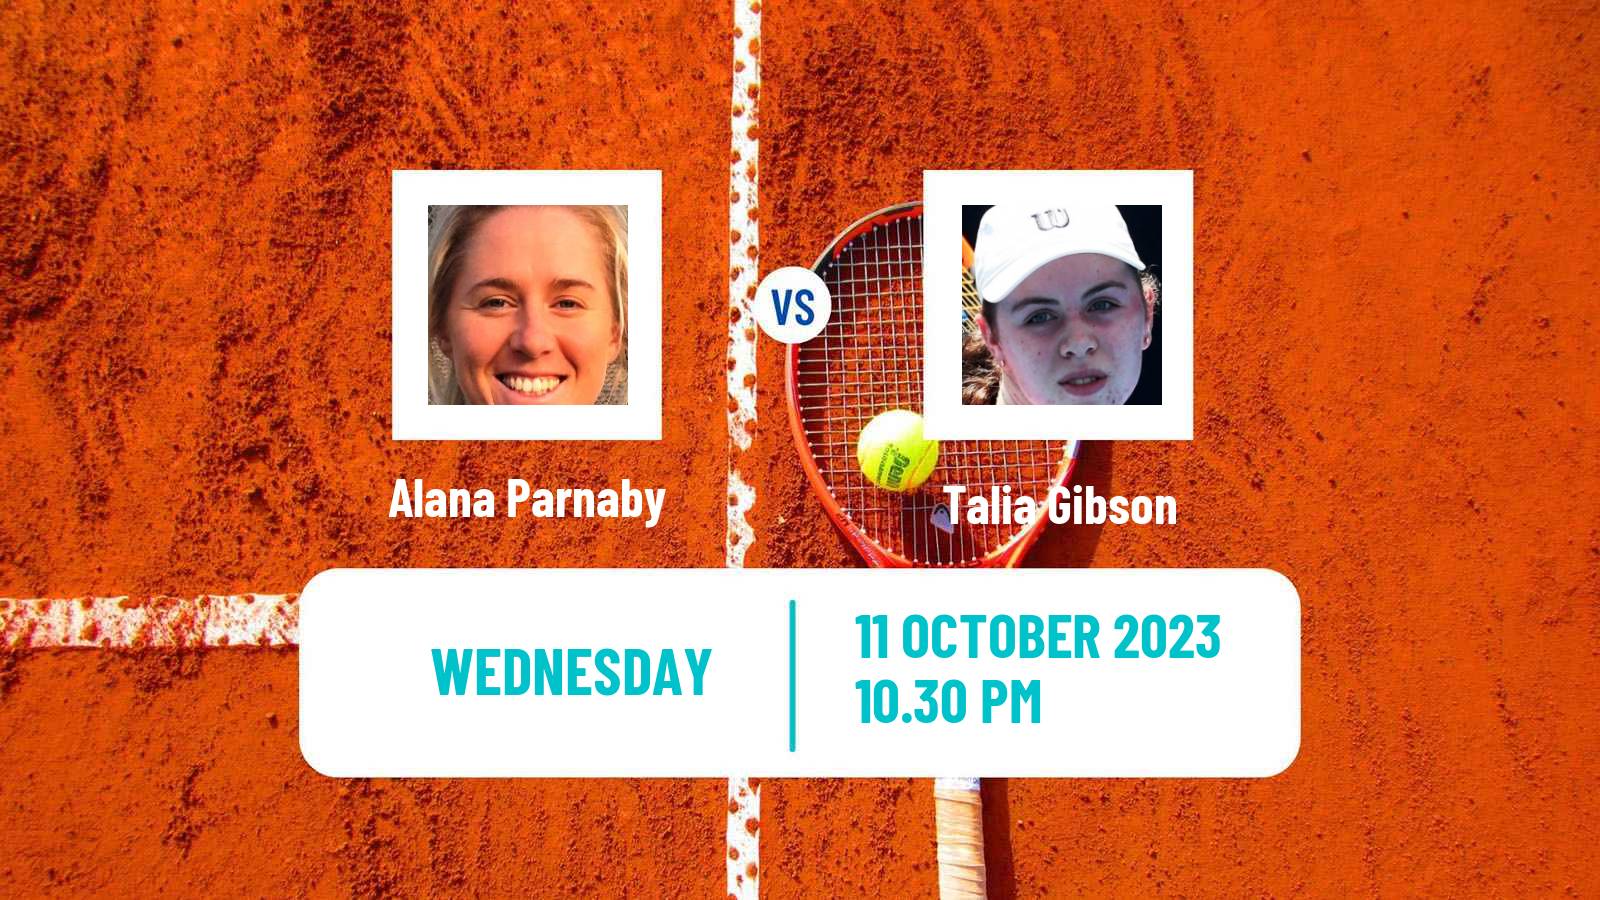 Tennis ITF W25 Cairns 2 Women Alana Parnaby - Talia Gibson